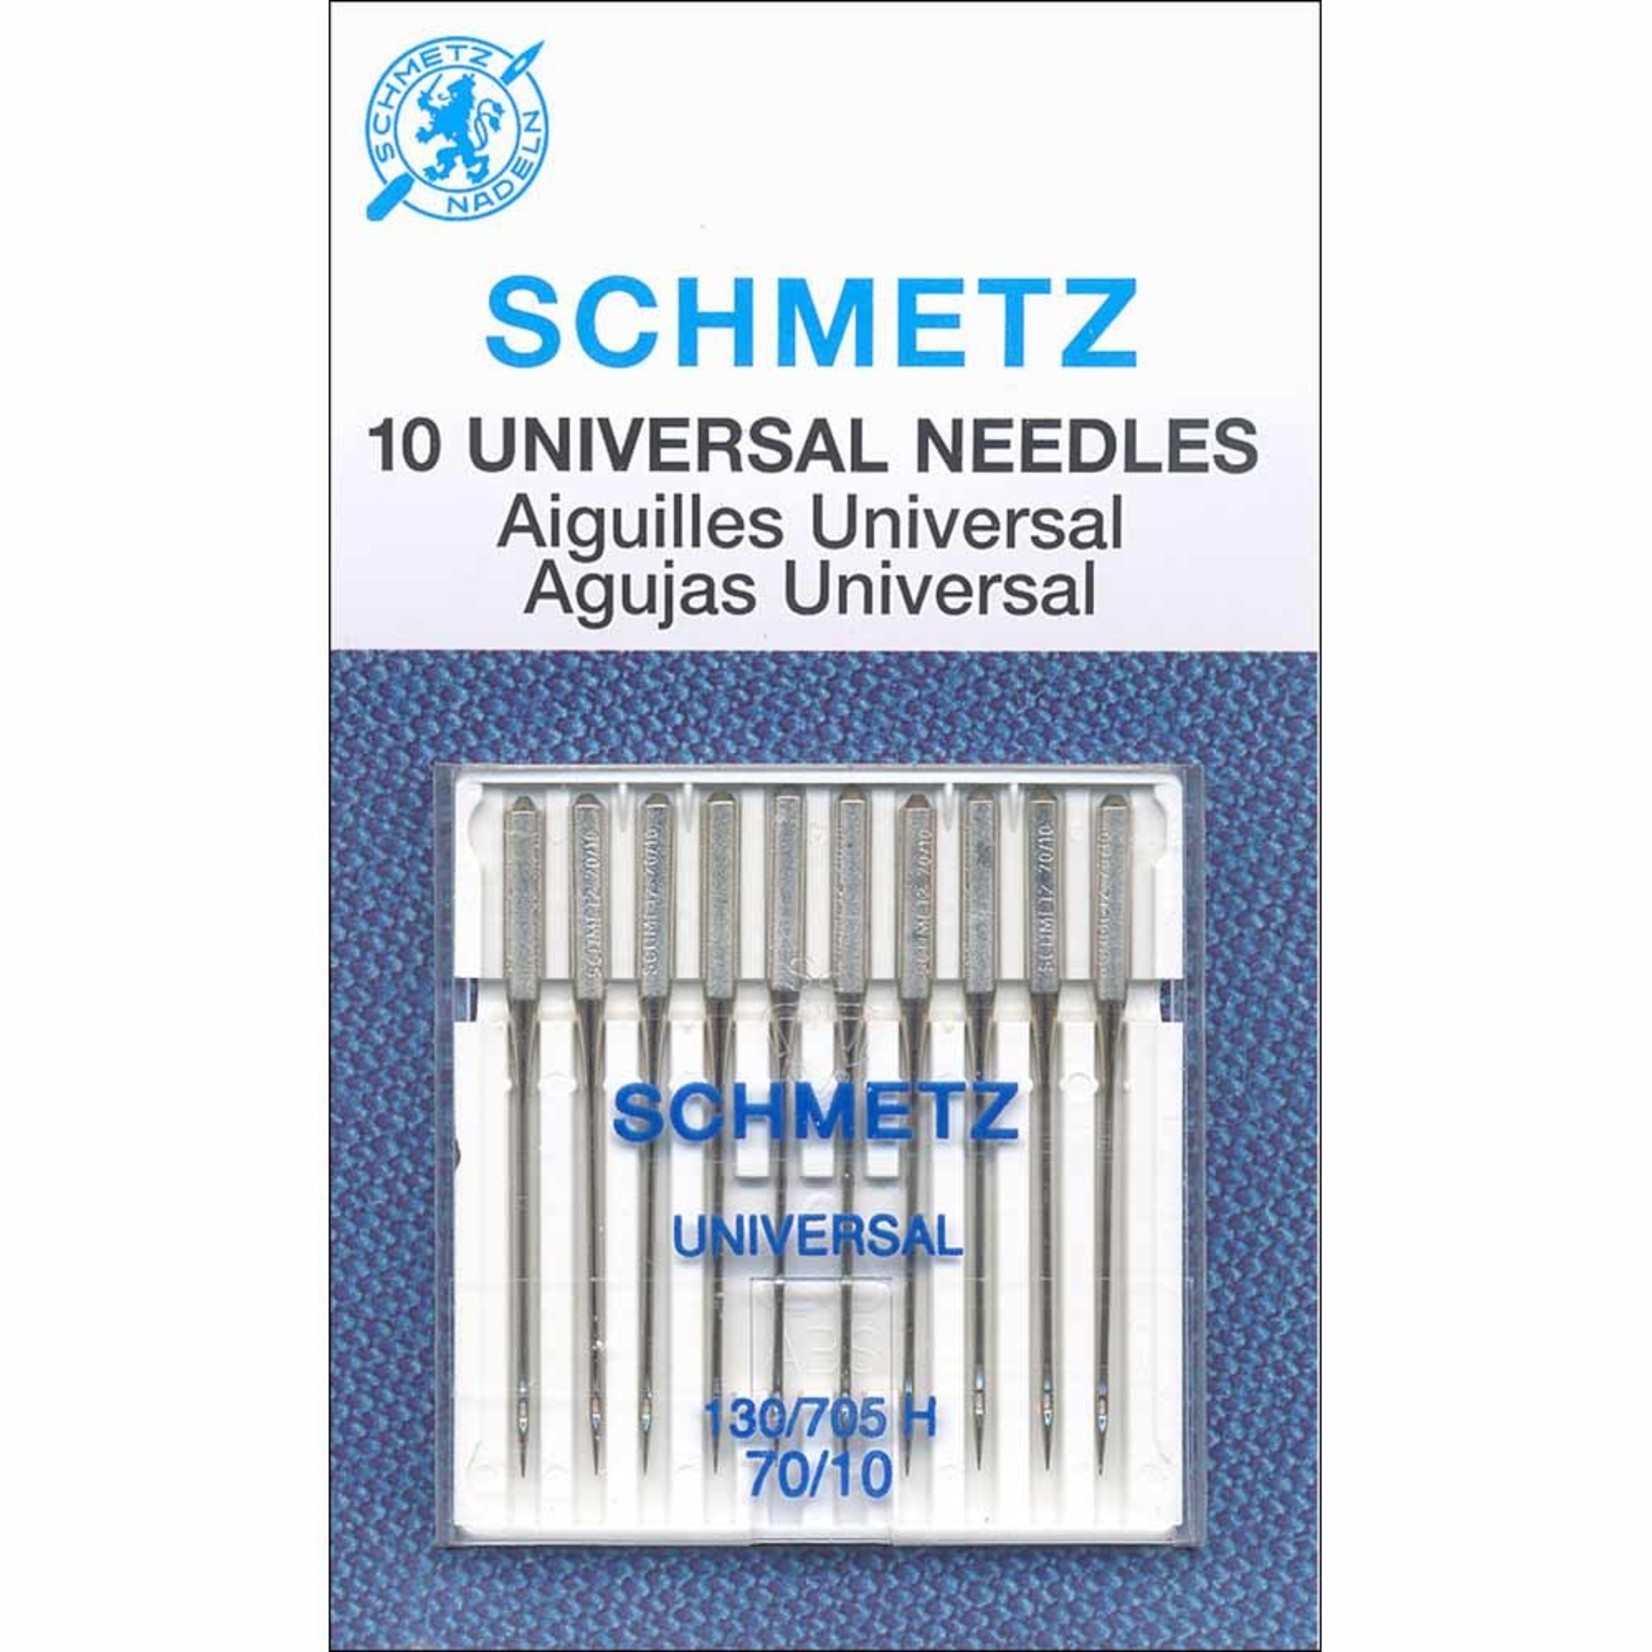 Schmetz SCHMETZ UNIVERSAL NEEDLE SIZE 70/10 CARDED 10/PKG